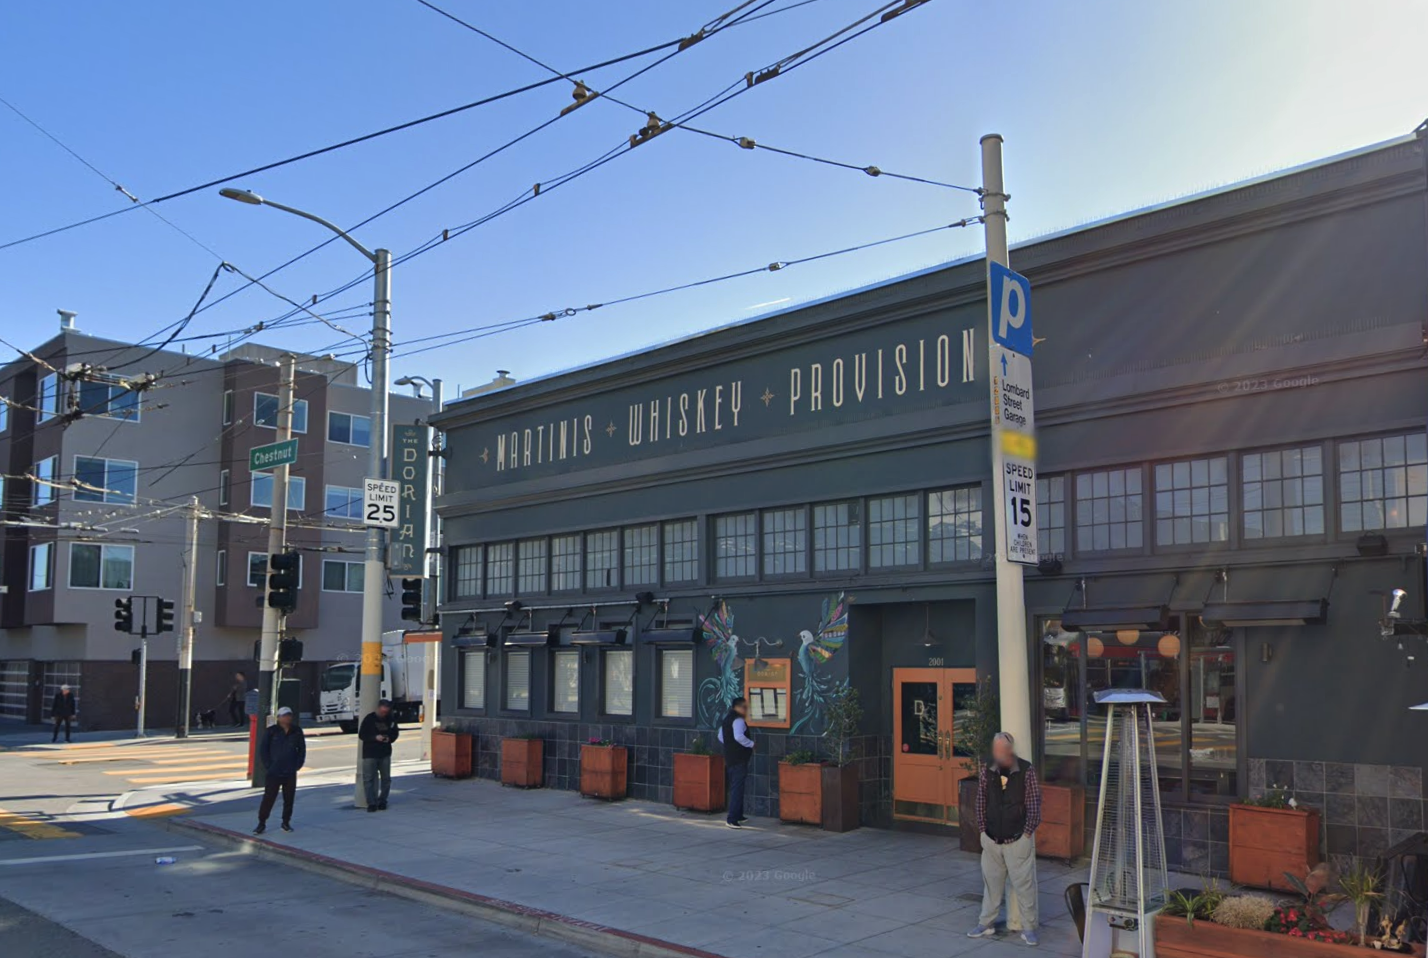 Victorian-Themed Bar Closing in San Francisco After 8-Year Run